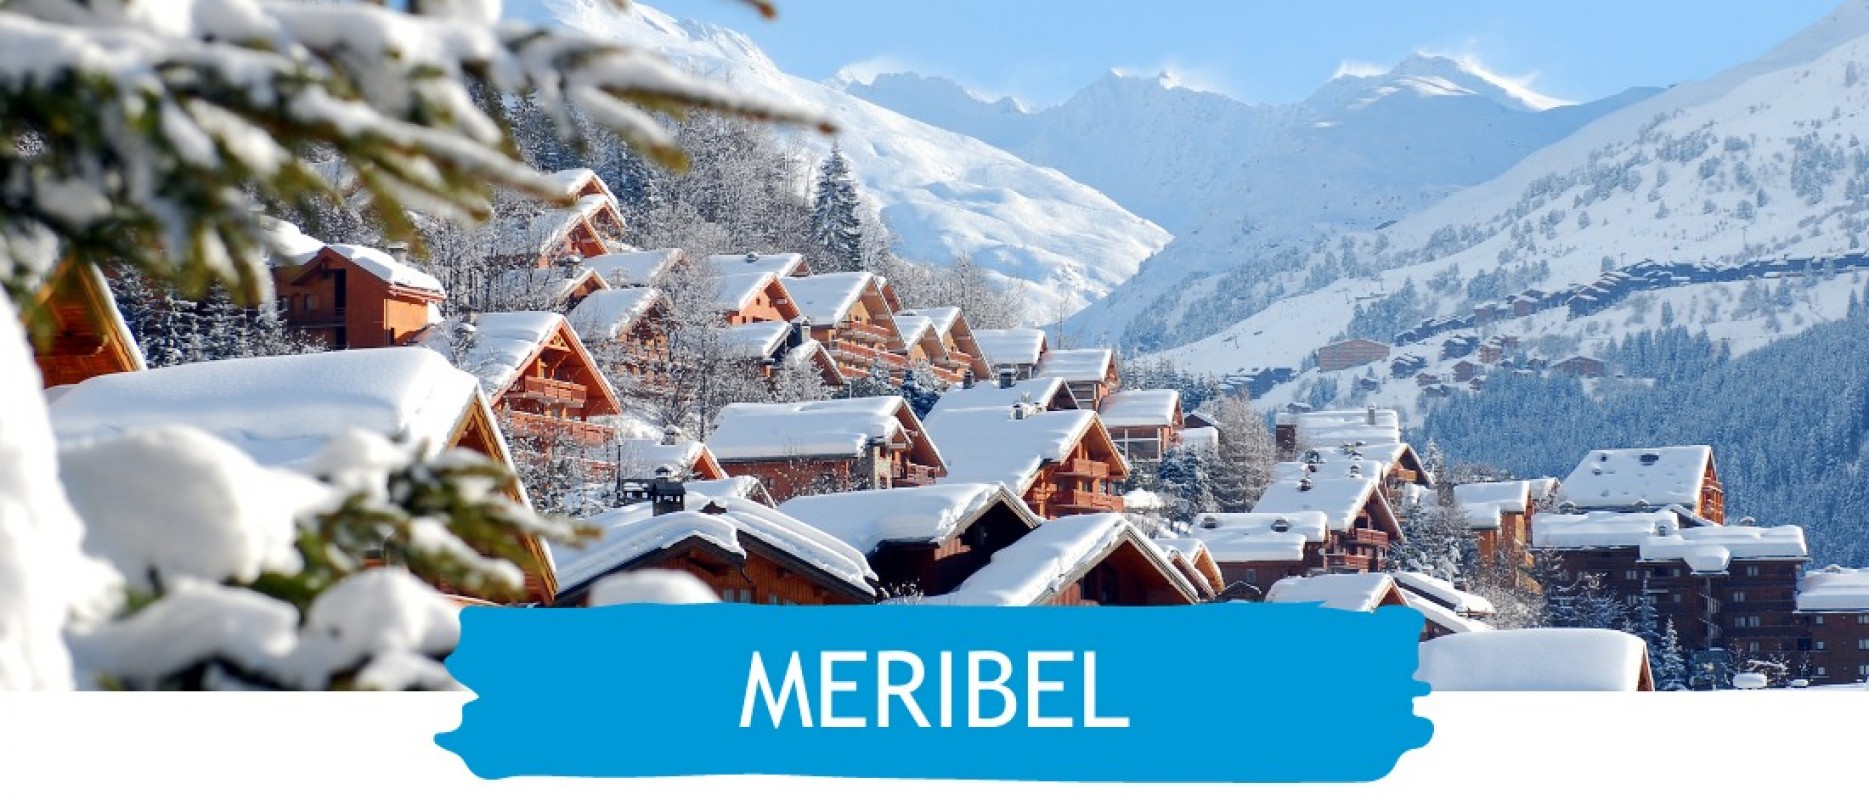 Meribel 8 night ski train package